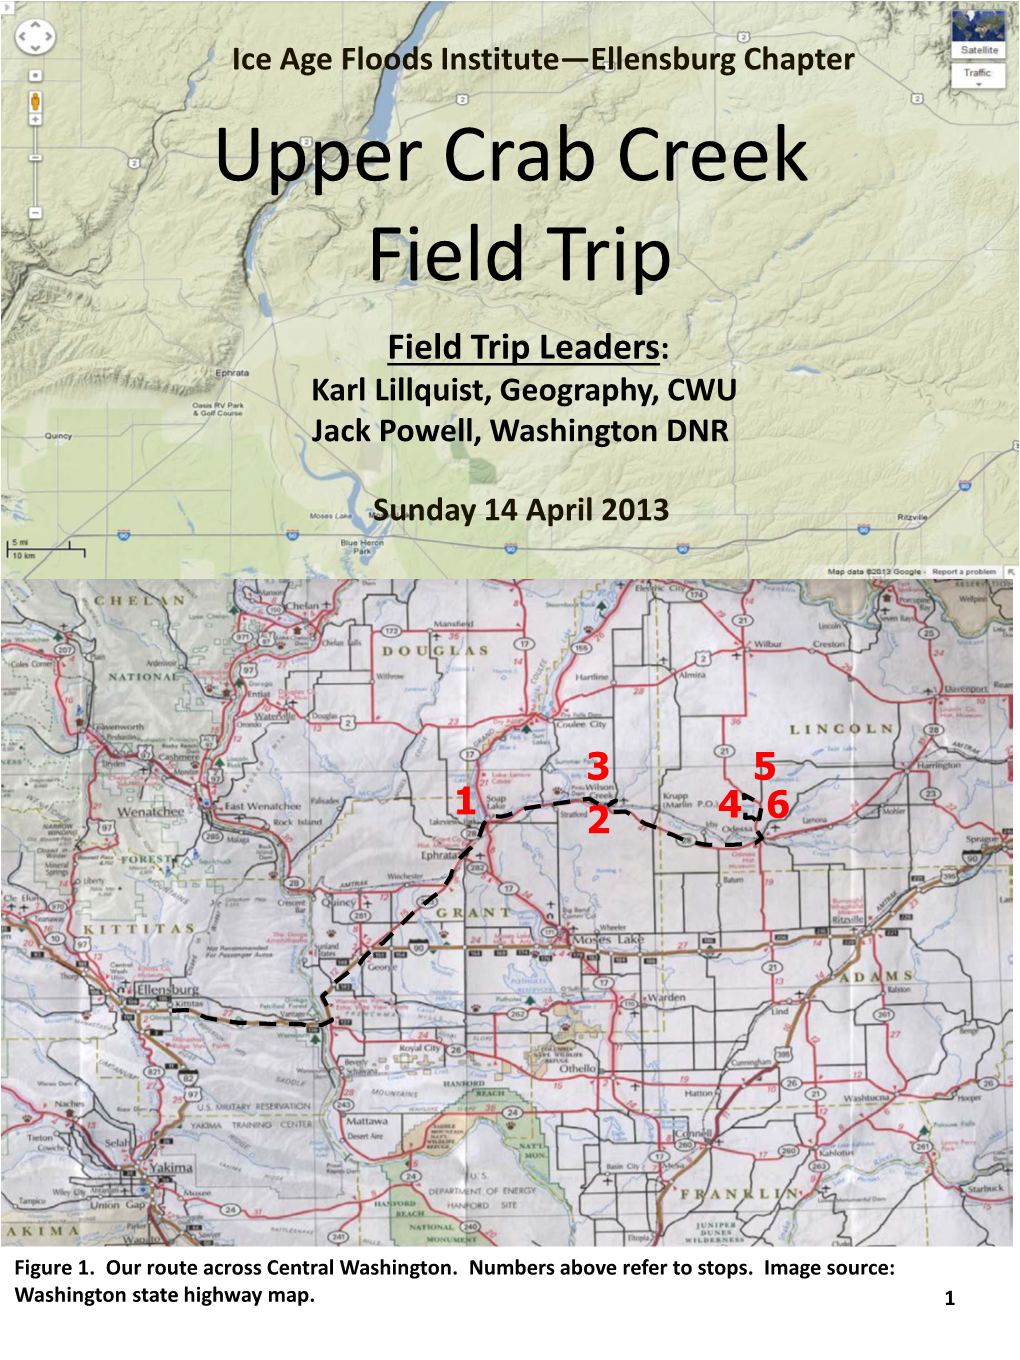 Upper Crab Creek Field Trip Field Trip Leaders: Karl Lillquist, Geography, CWU Jack Powell, Washington DNR